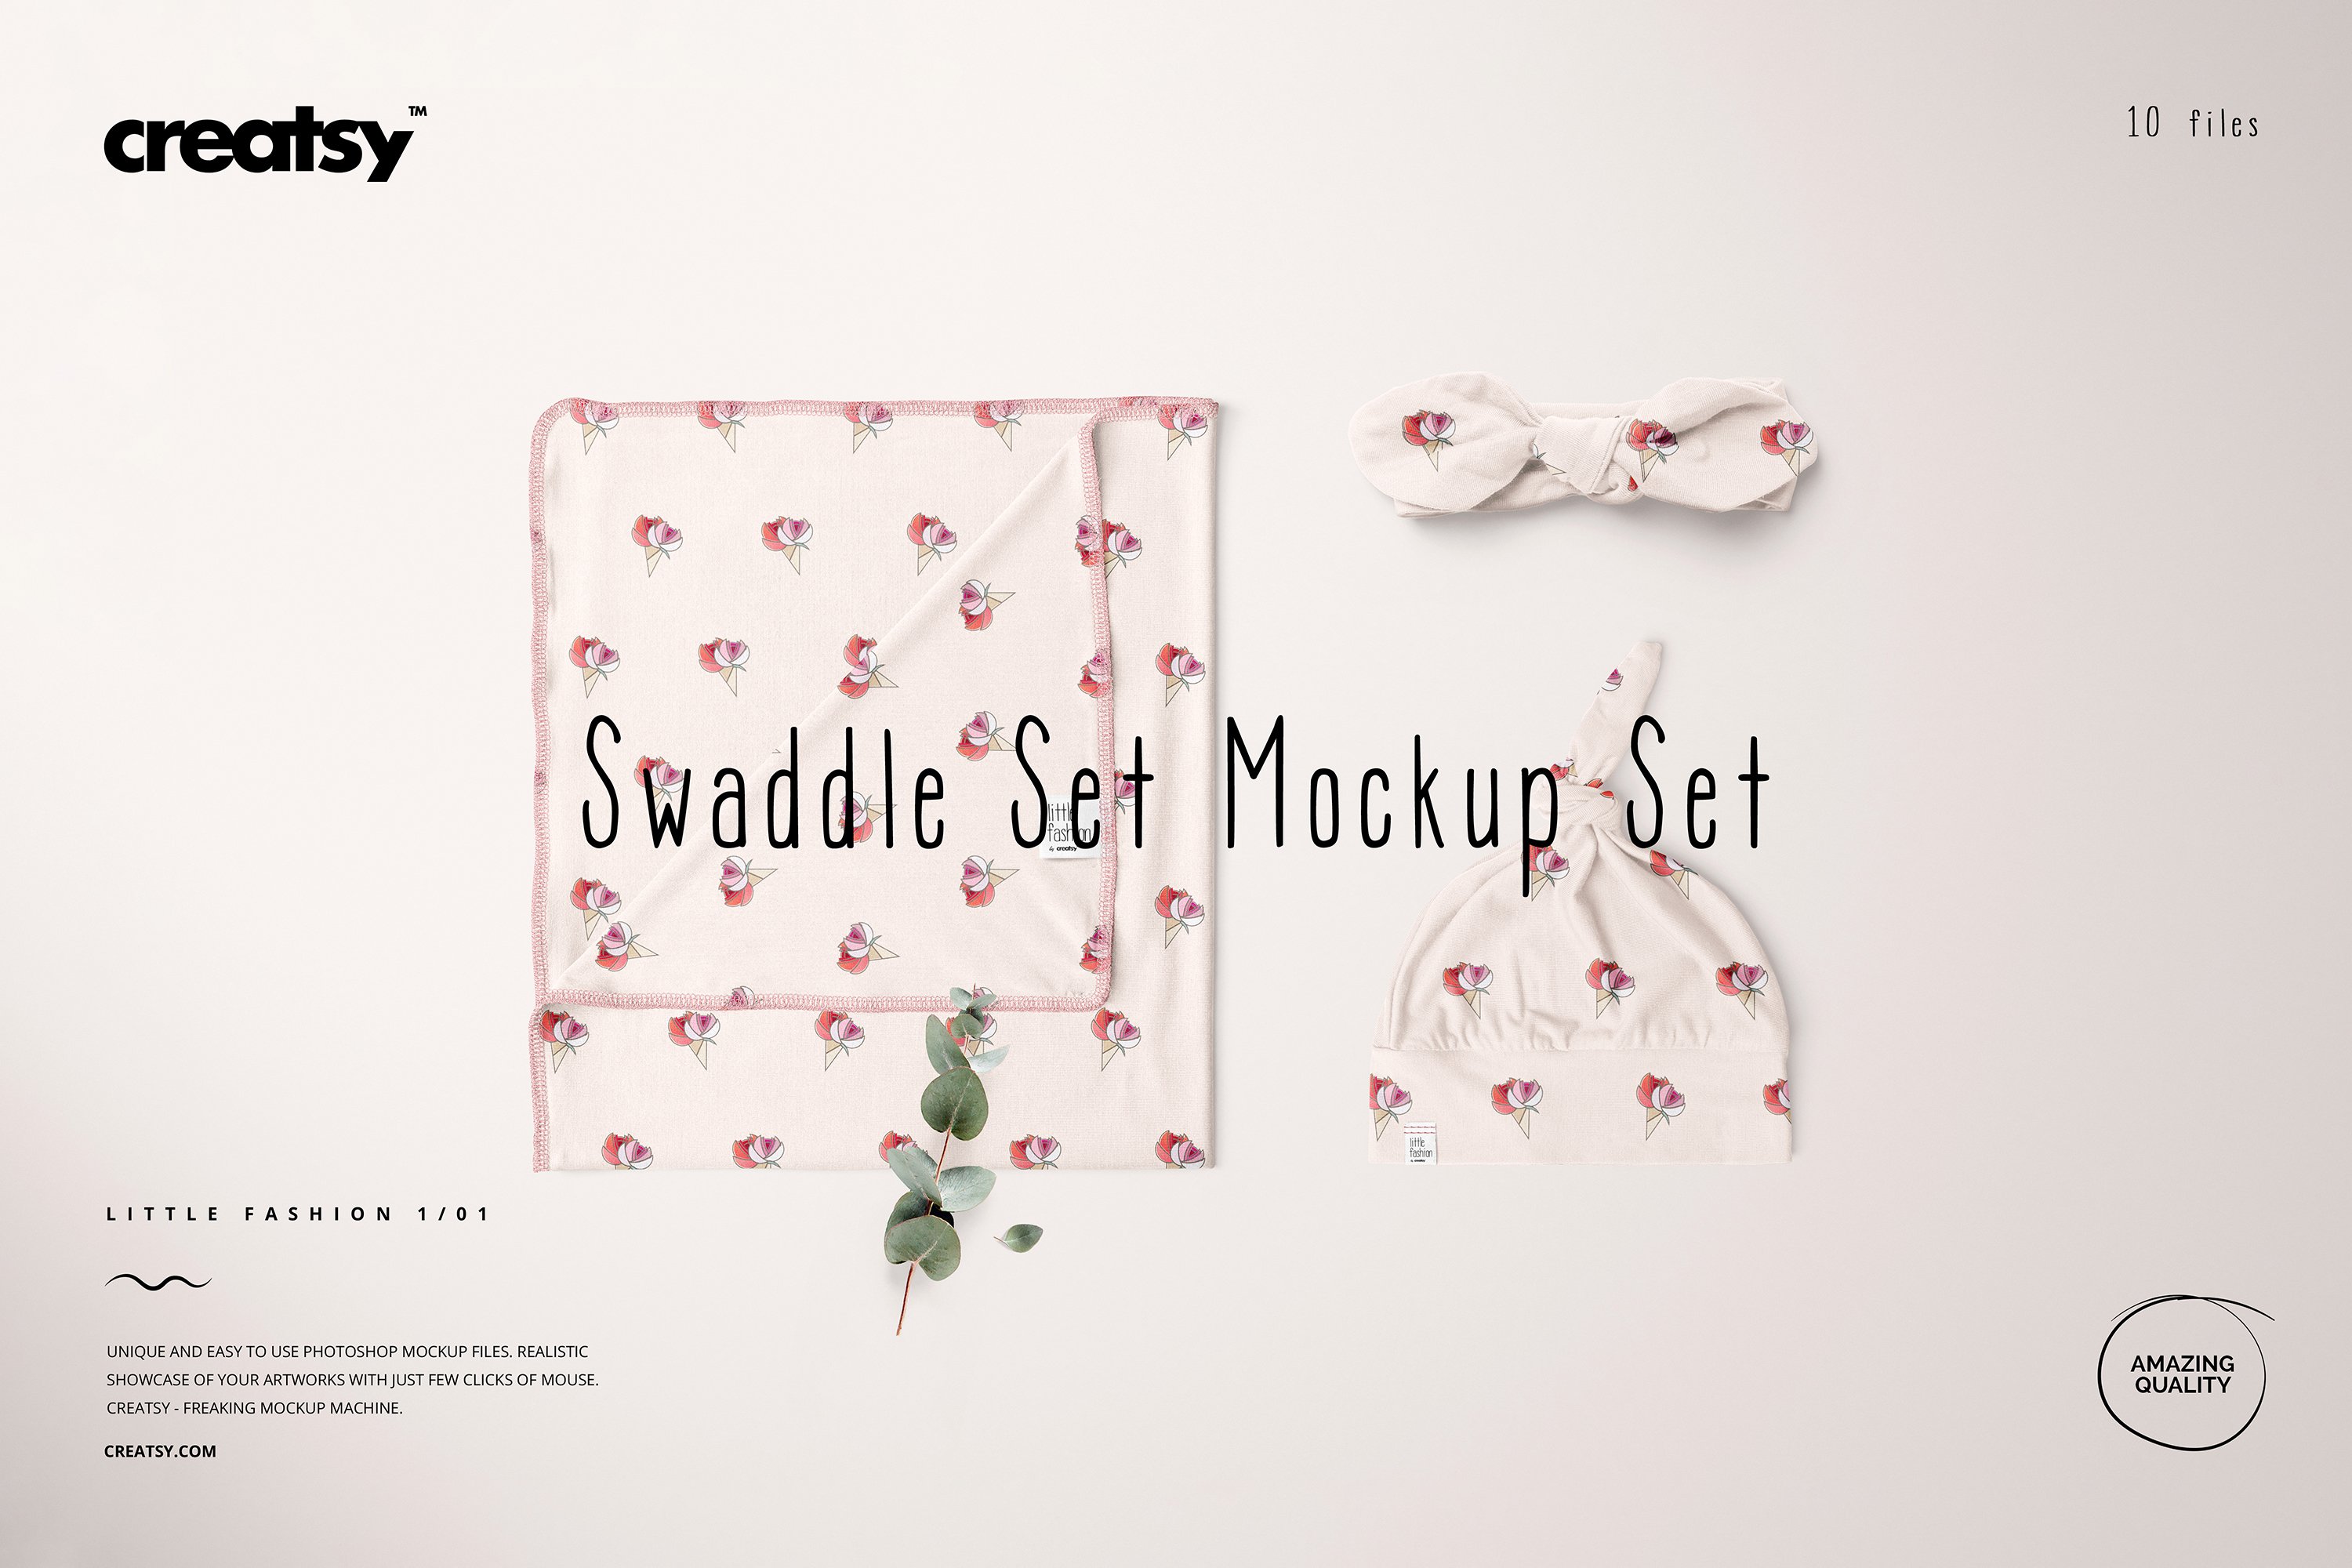 Swaddle Set Mockup Set cover image.